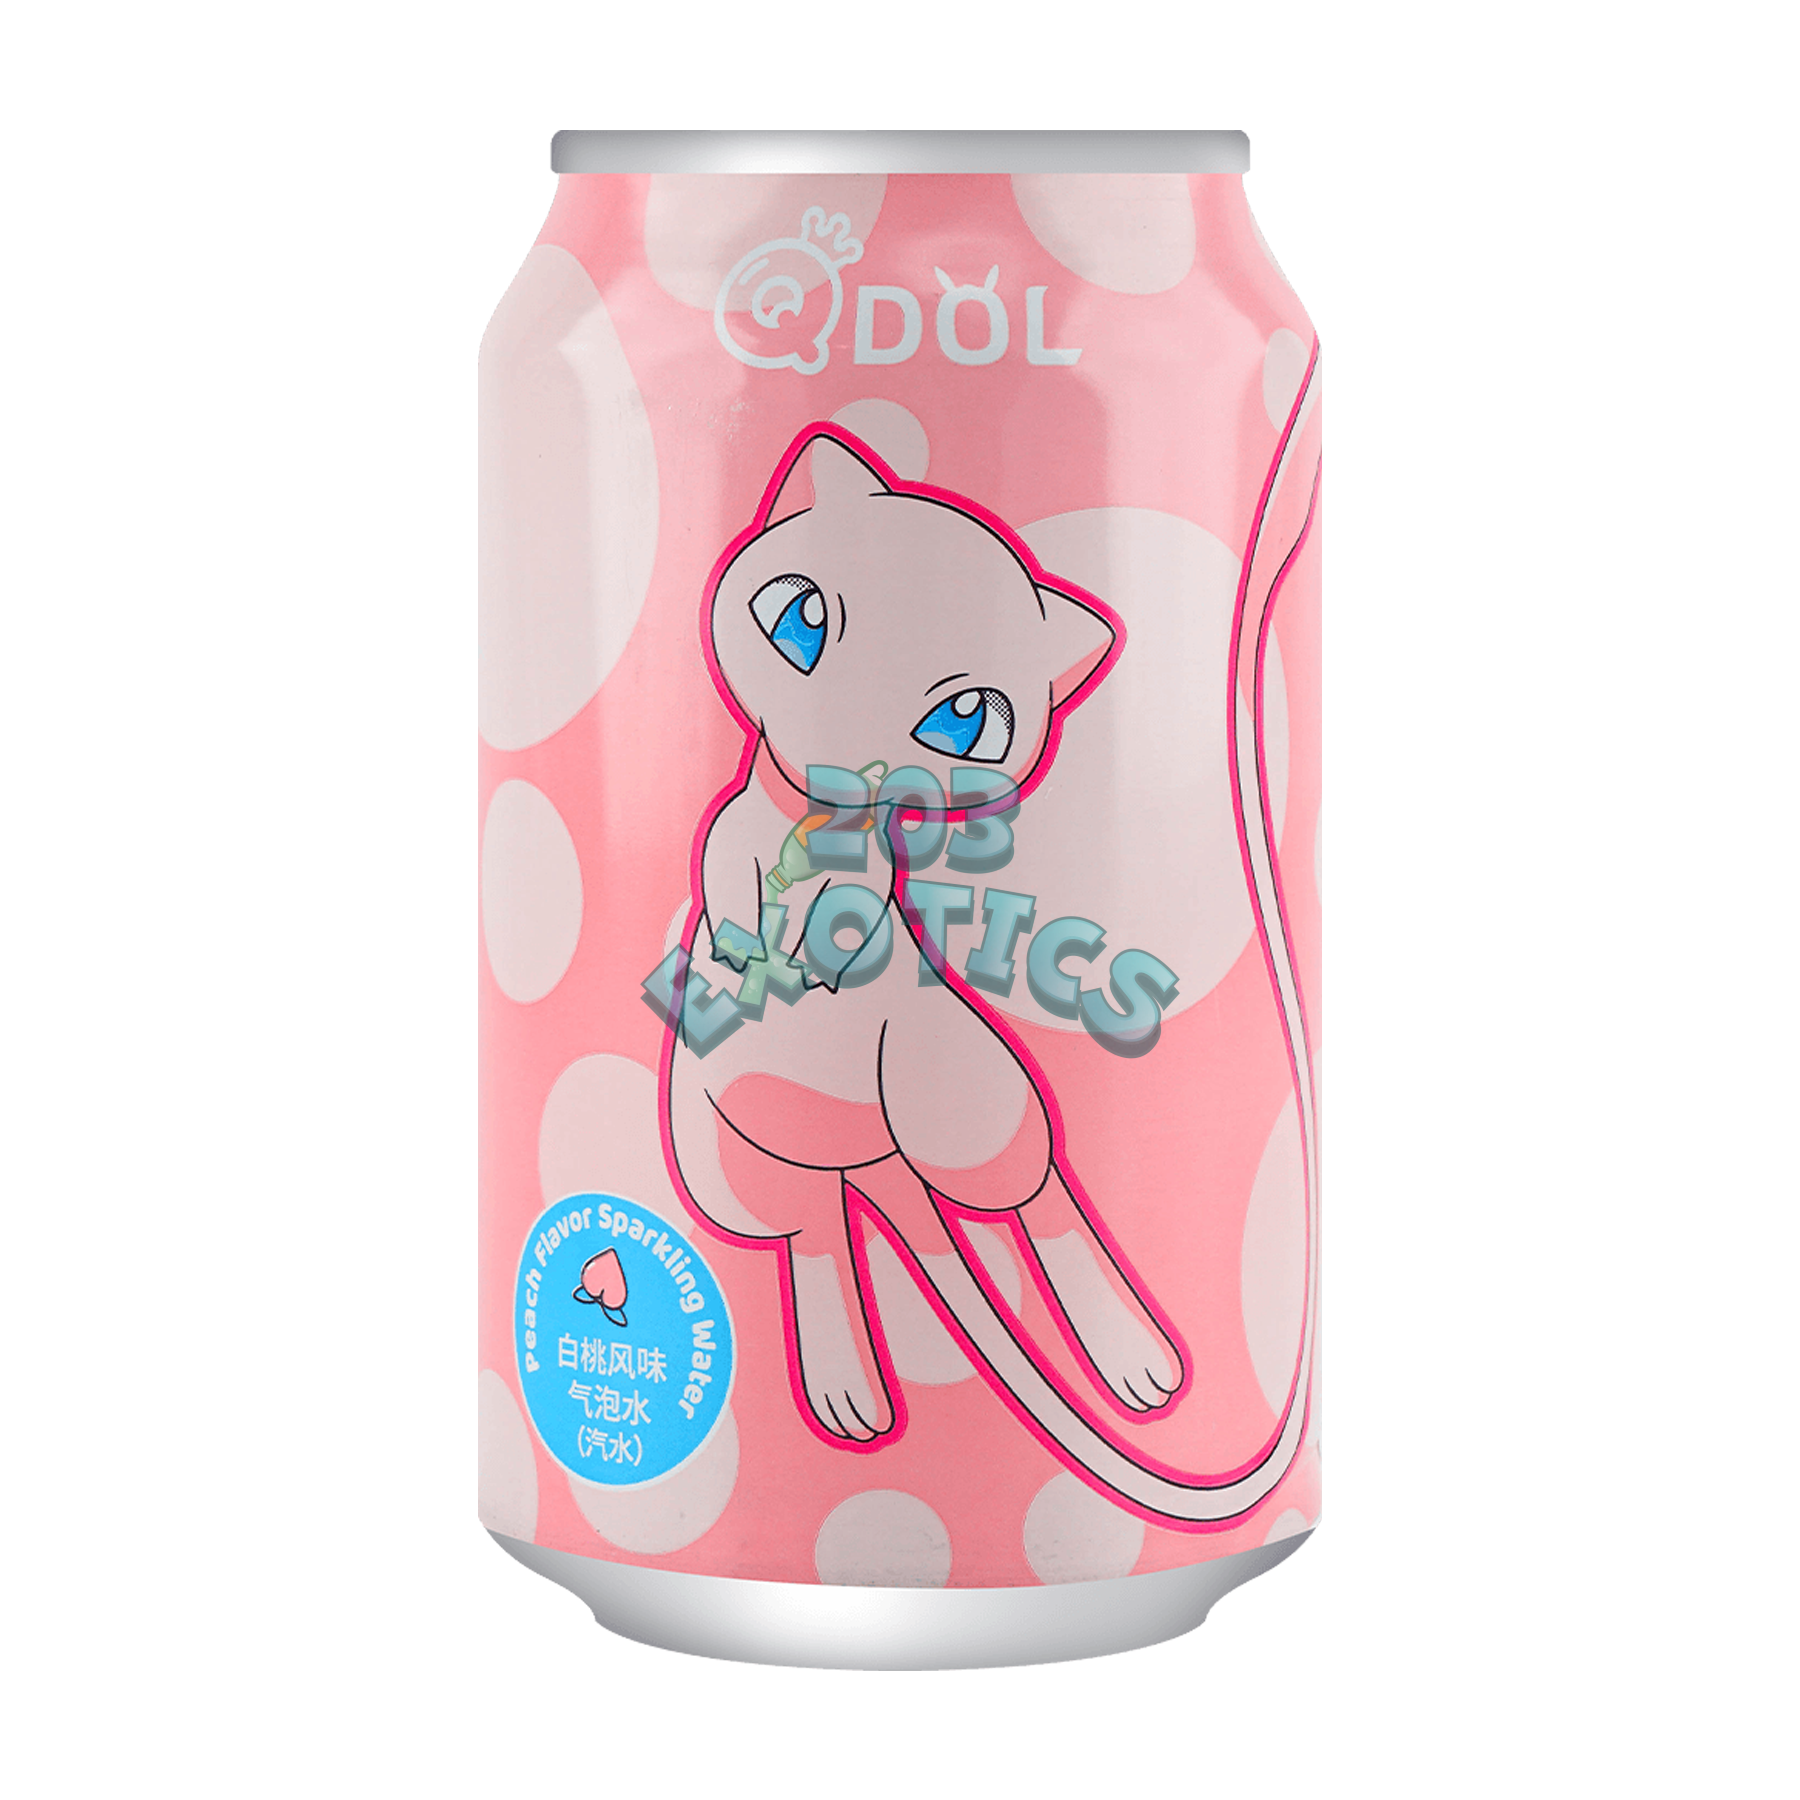 Qdol Pokemon Sparkling Water Mew Peach Flavored (11.16 Fl Oz)